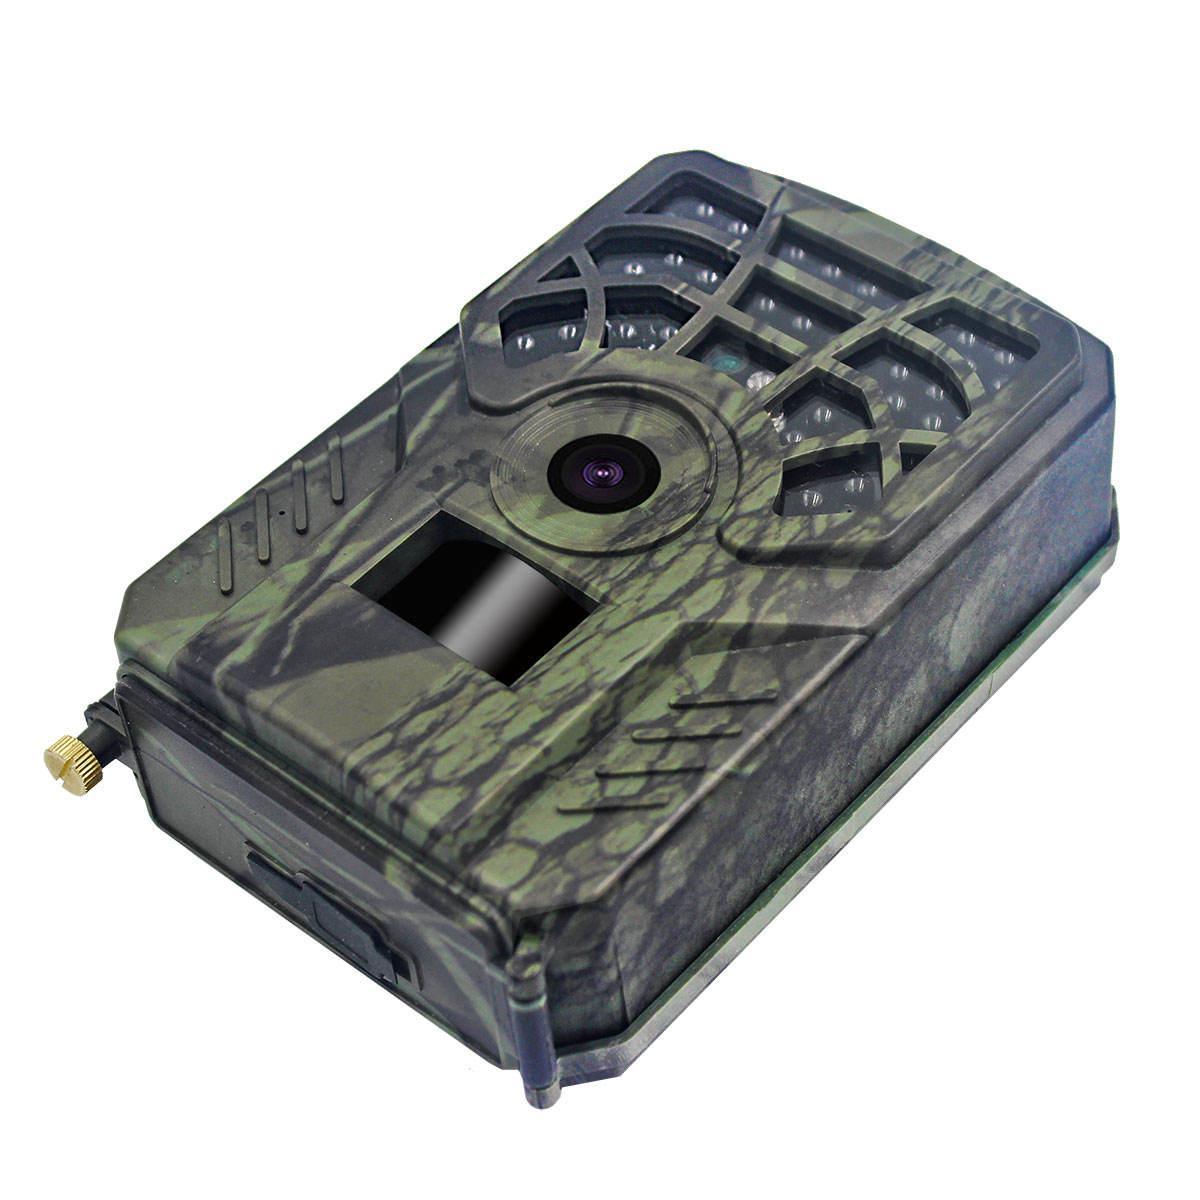 Wildlife monitoring night vision waterproof digital thermal imager wild hunting camera